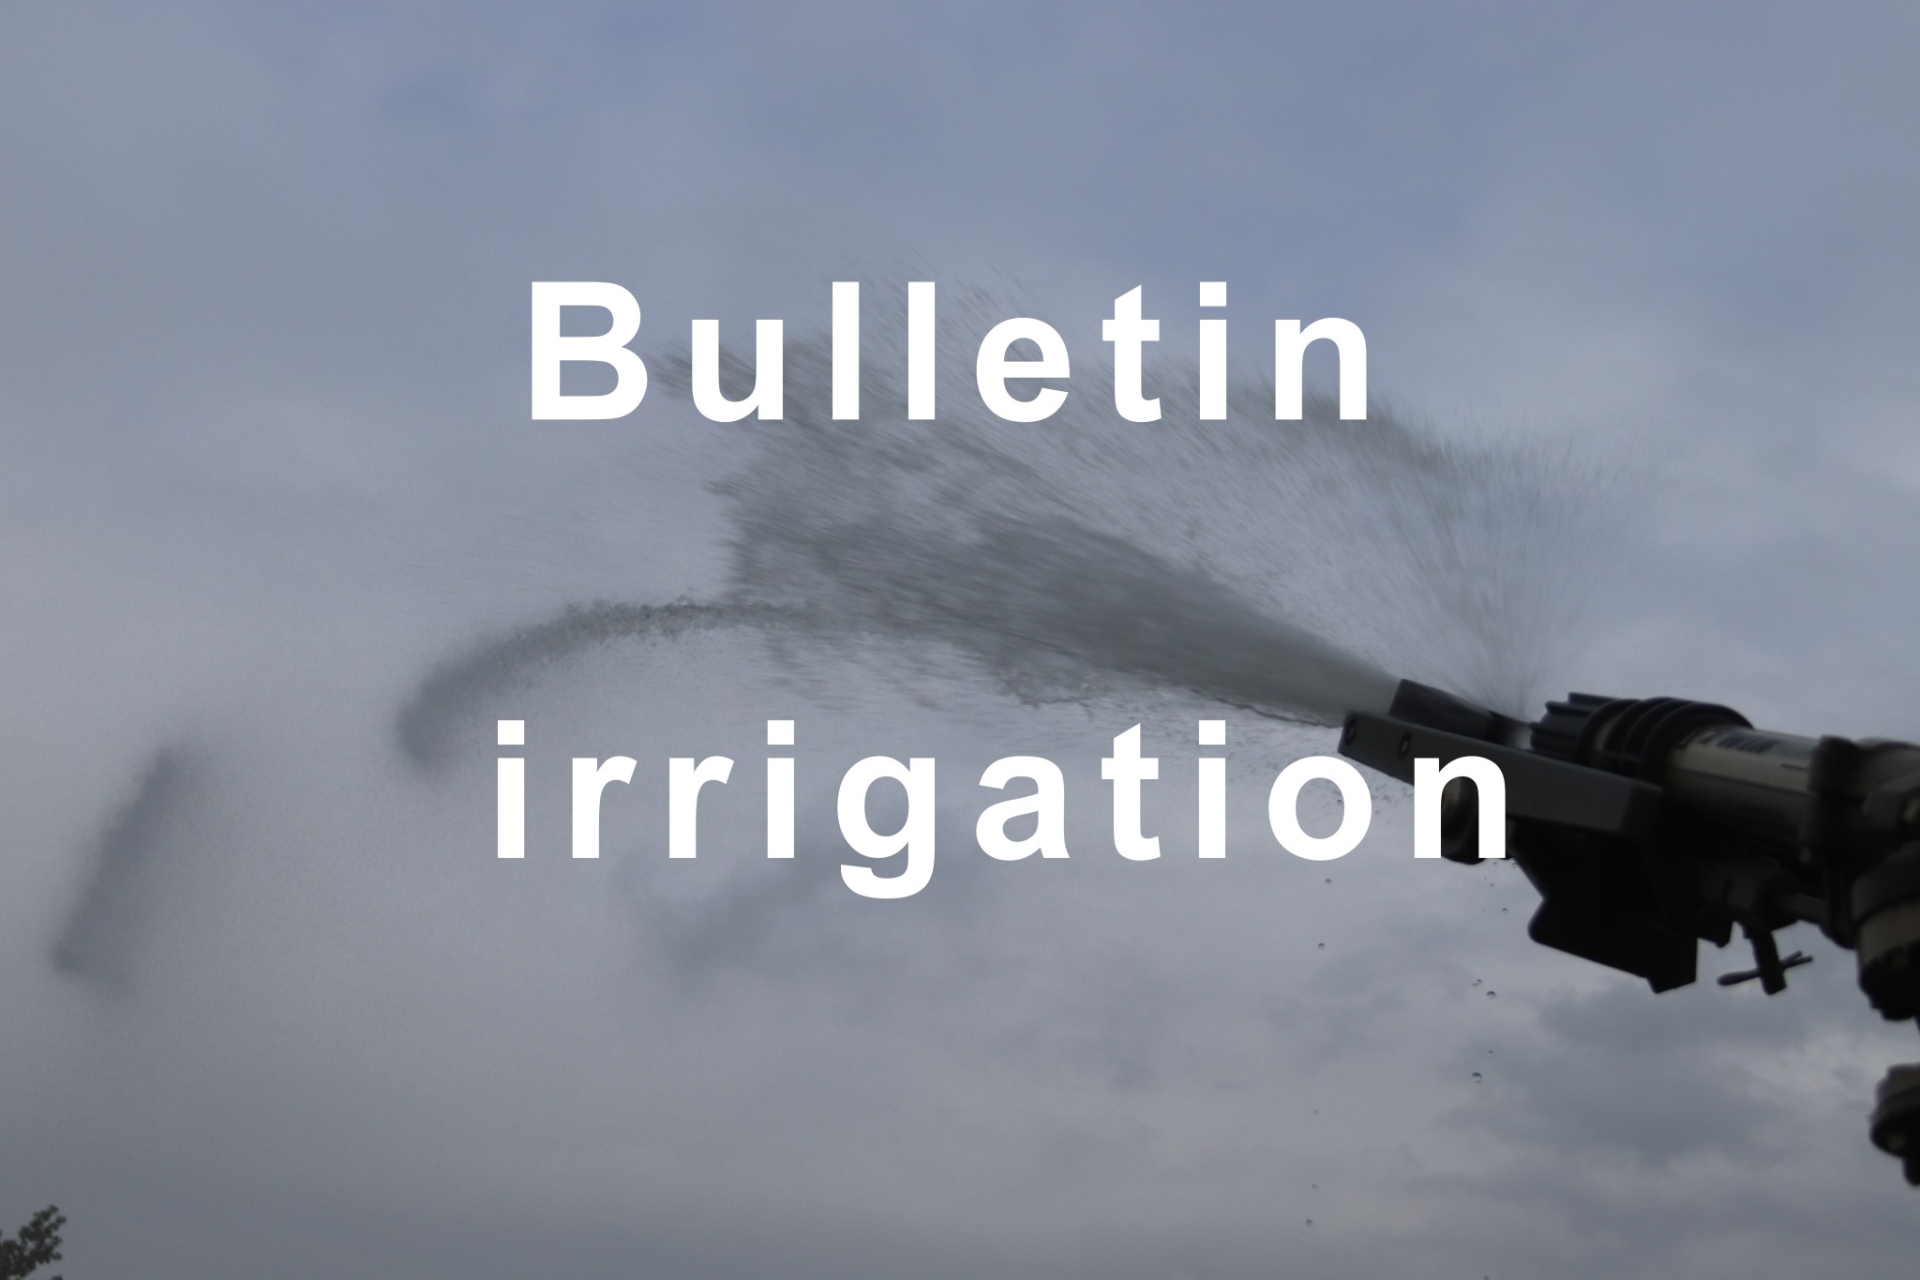 Bulletin d’irrigation du 2 mai au 4 juin